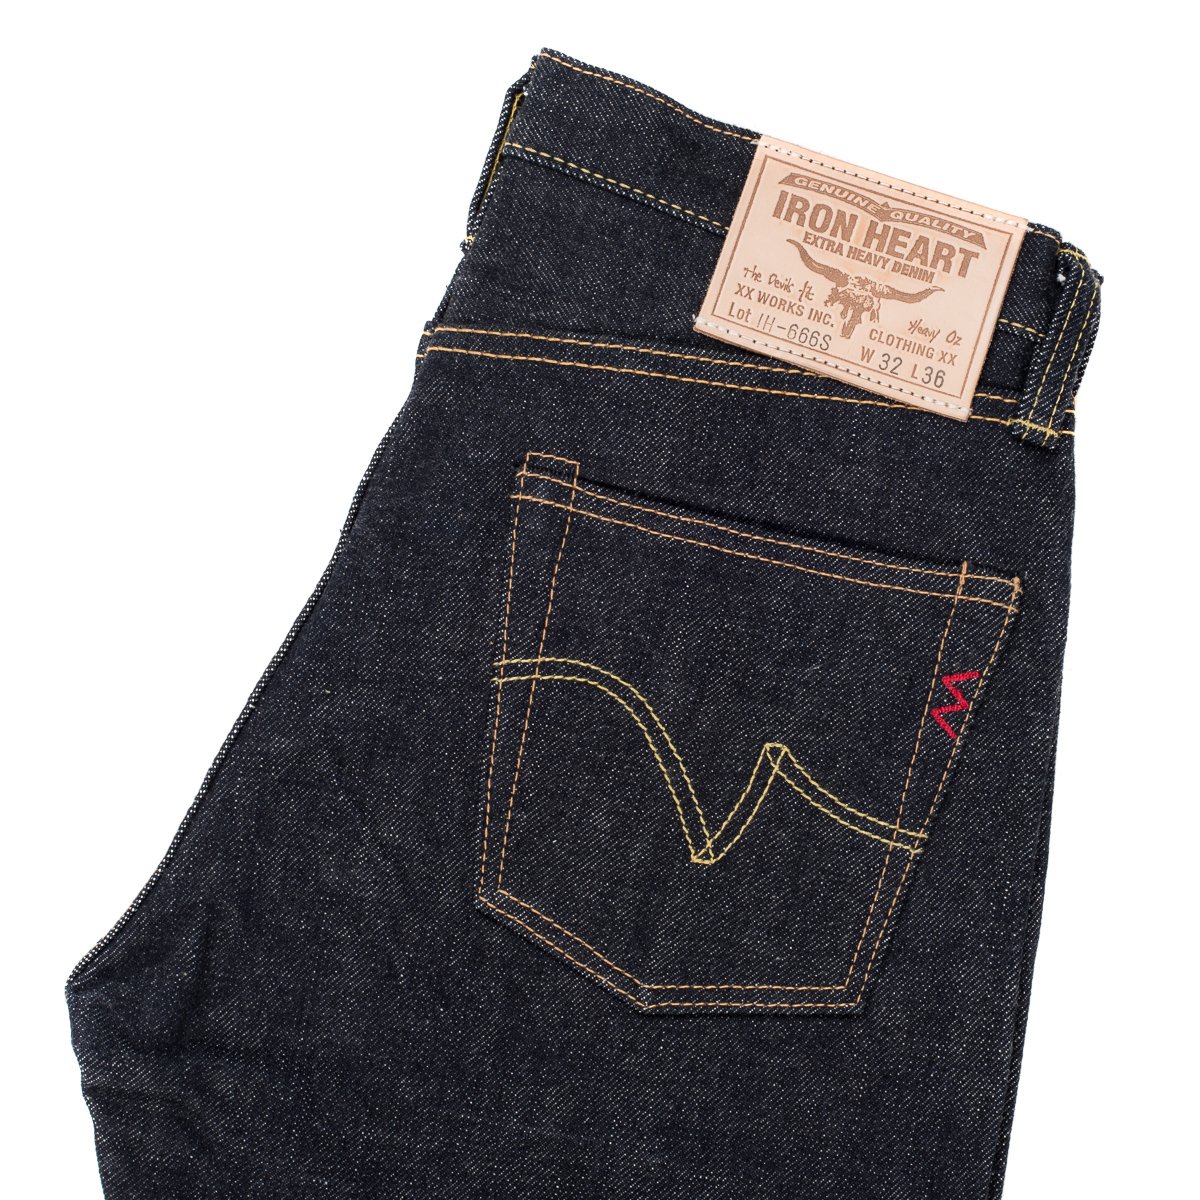 IH-666S | Iron Heart Slim Cut Jeans in 18oz Raw Indigo Japanese Denim